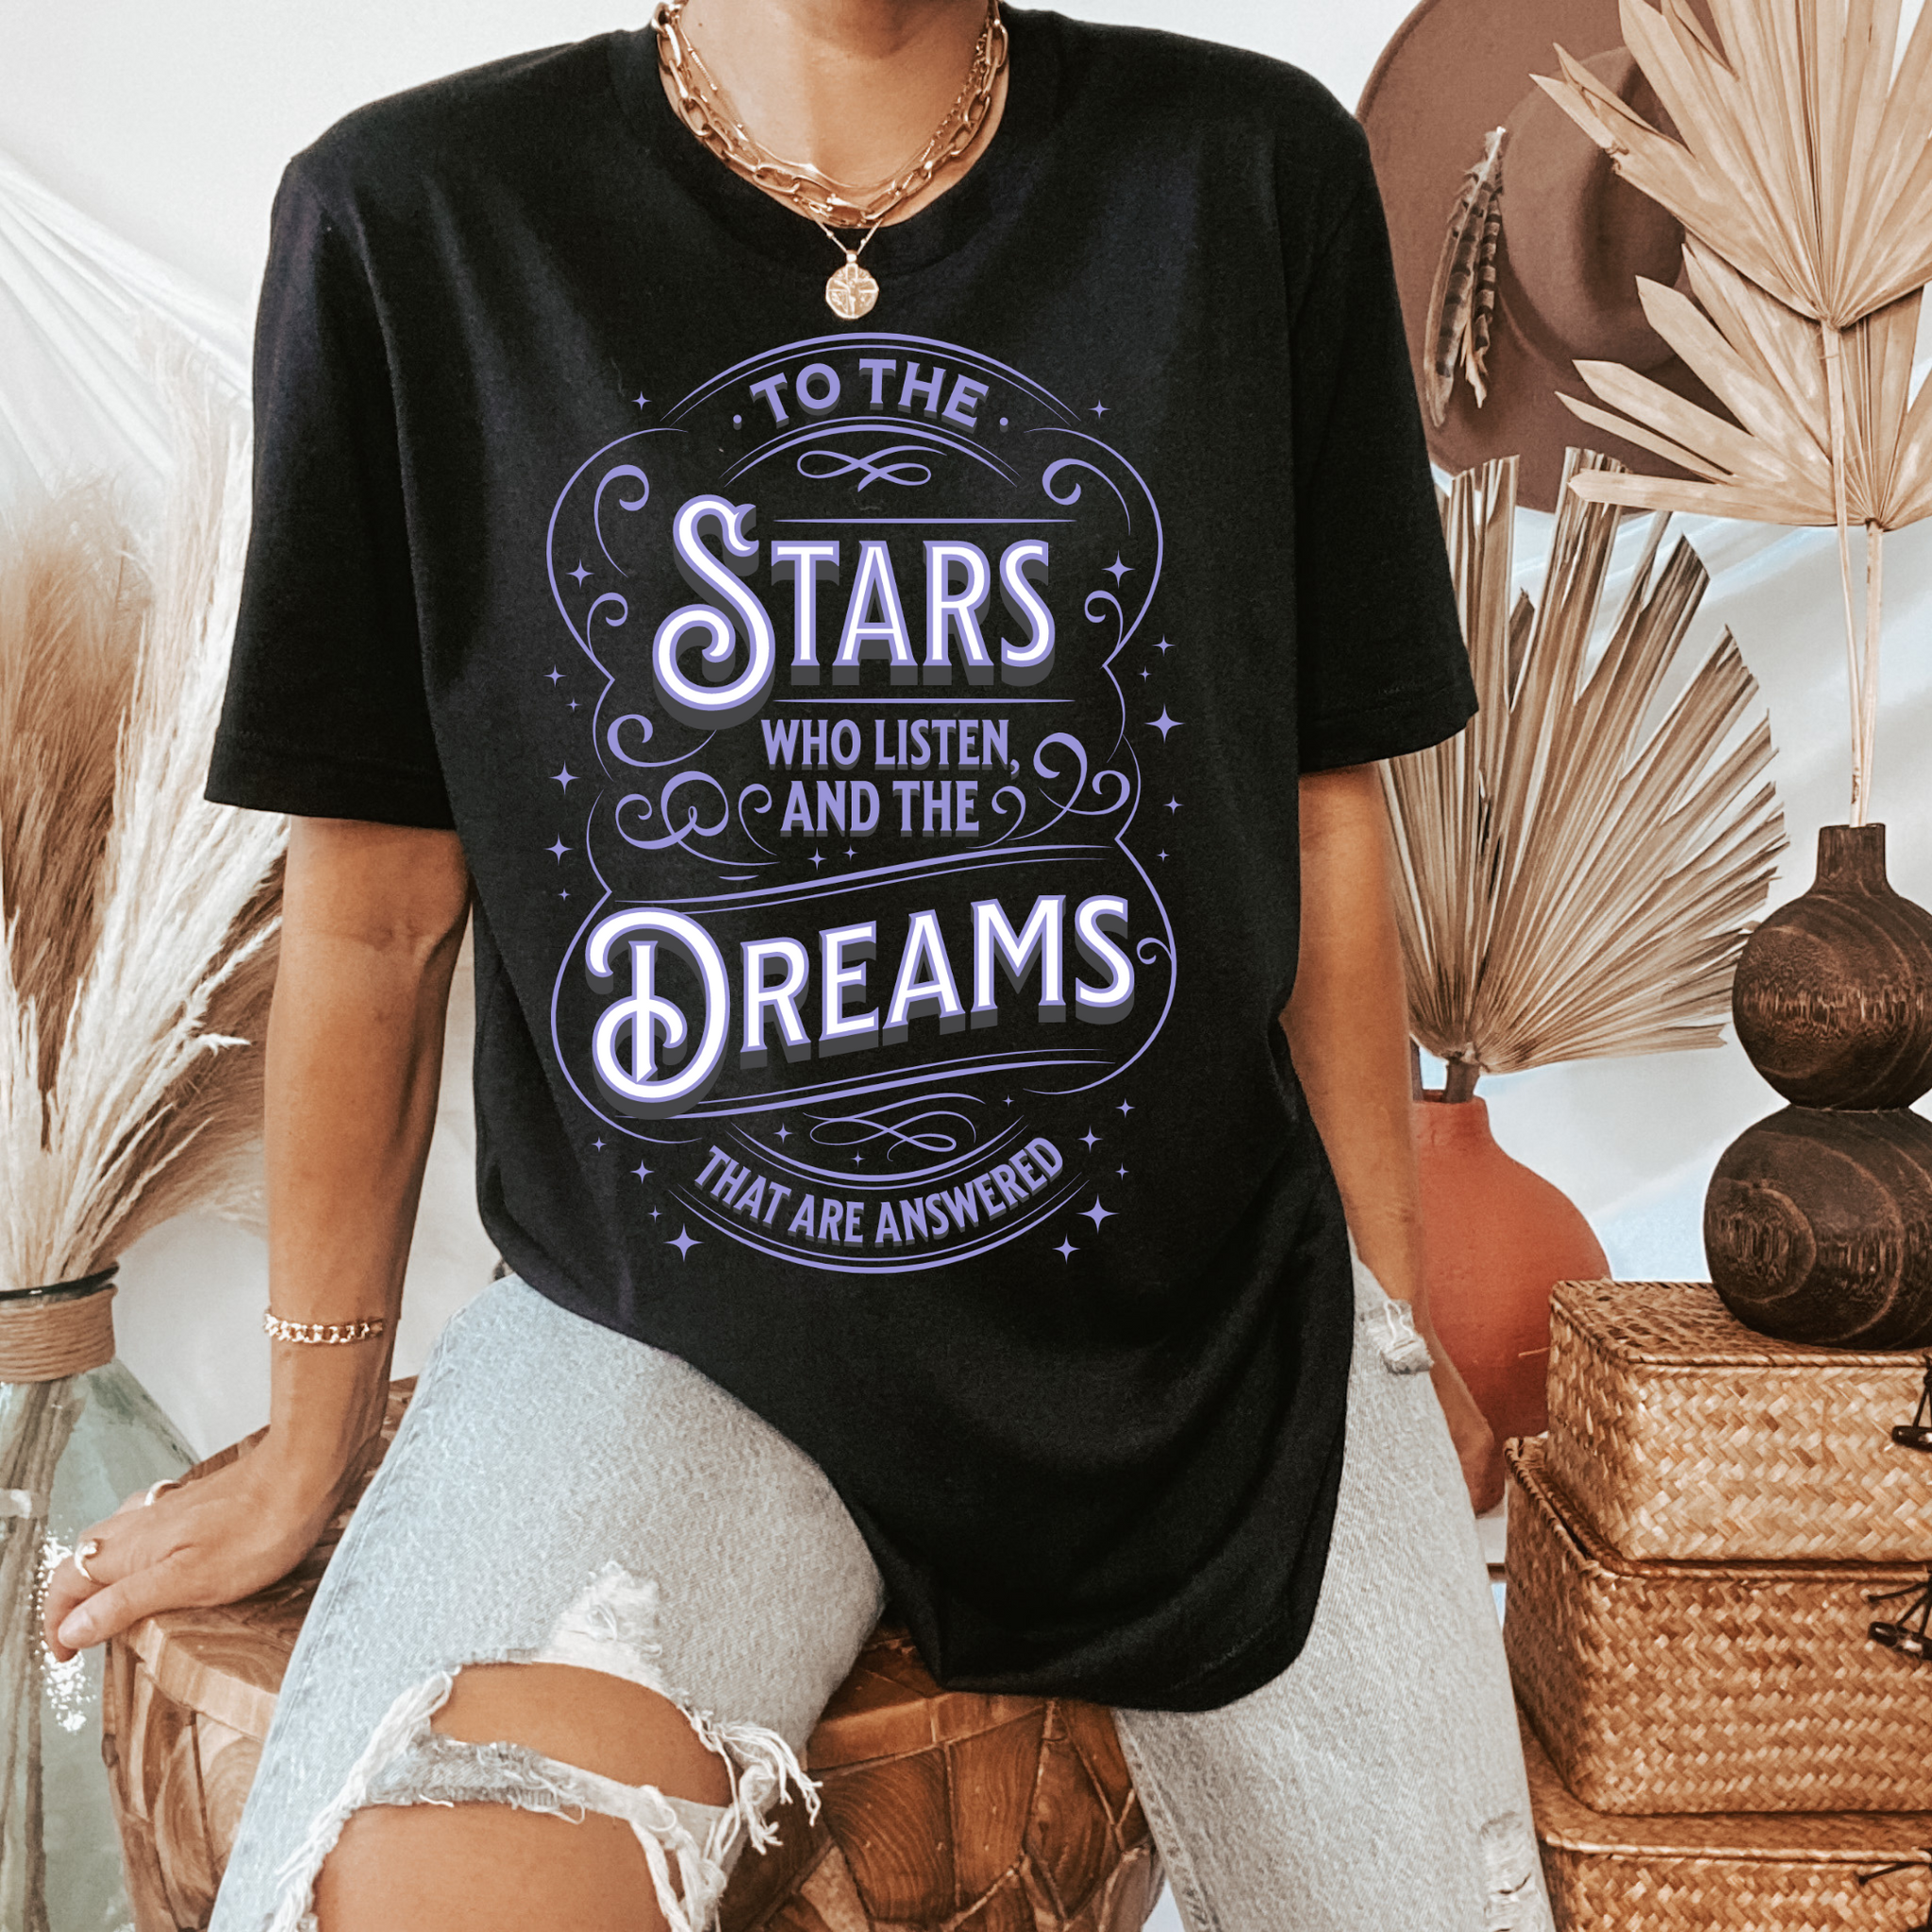 "To the Stars" ACOTAR T-Shirt